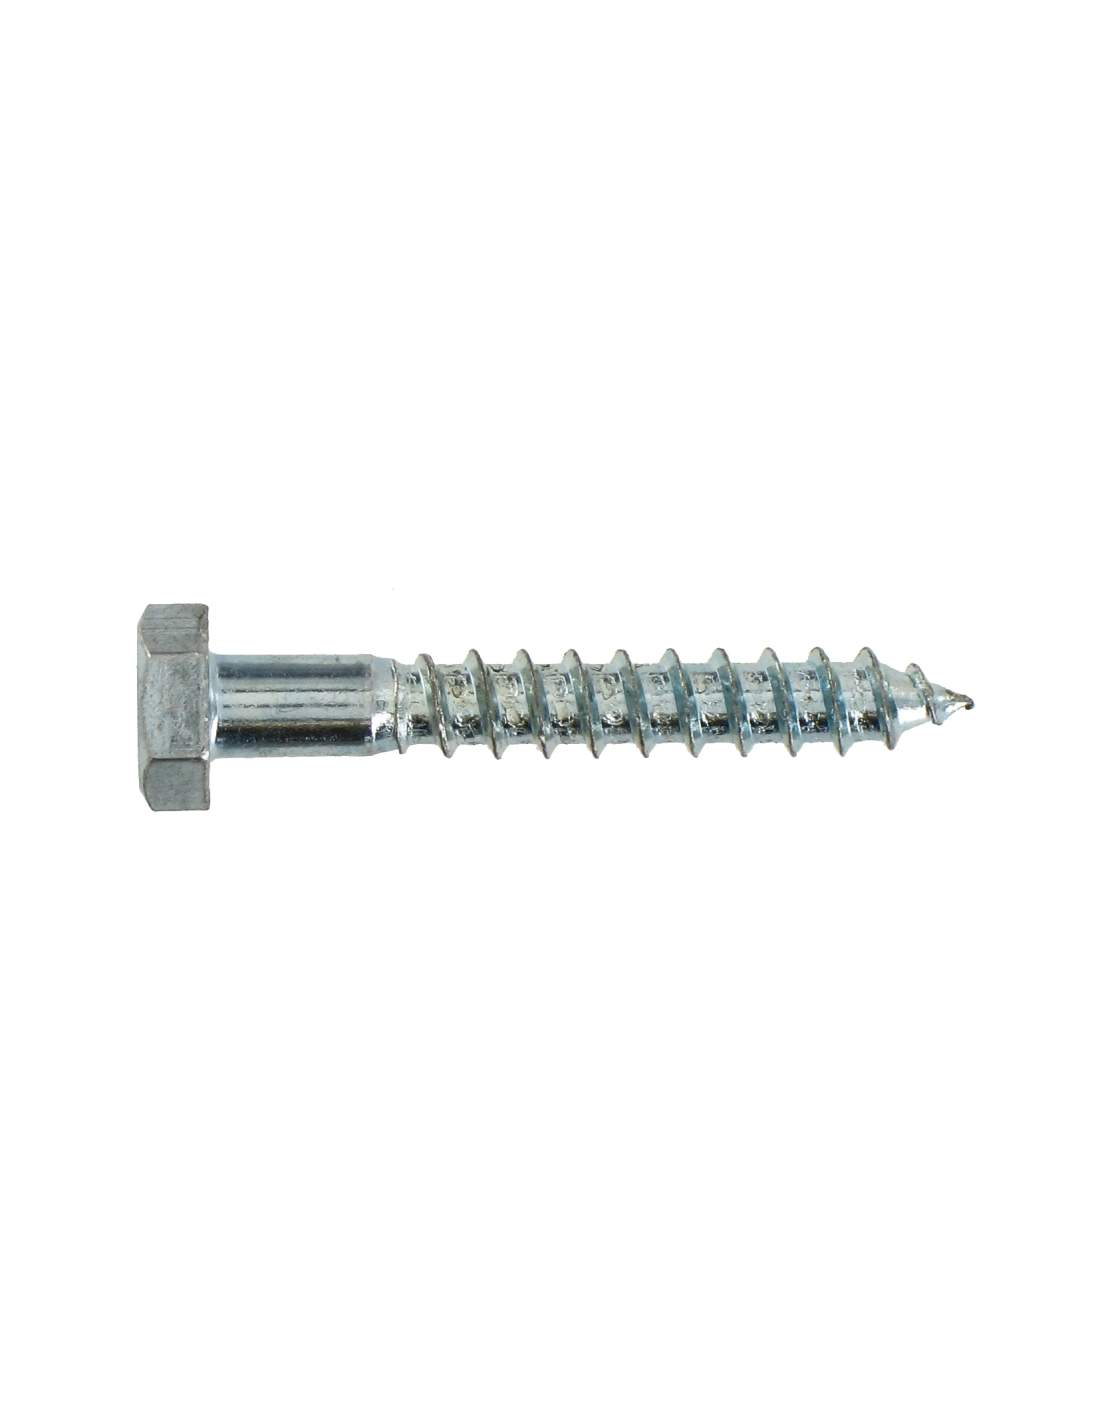 Zinc-plated steel lag bolt 10x100, 2 pieces.